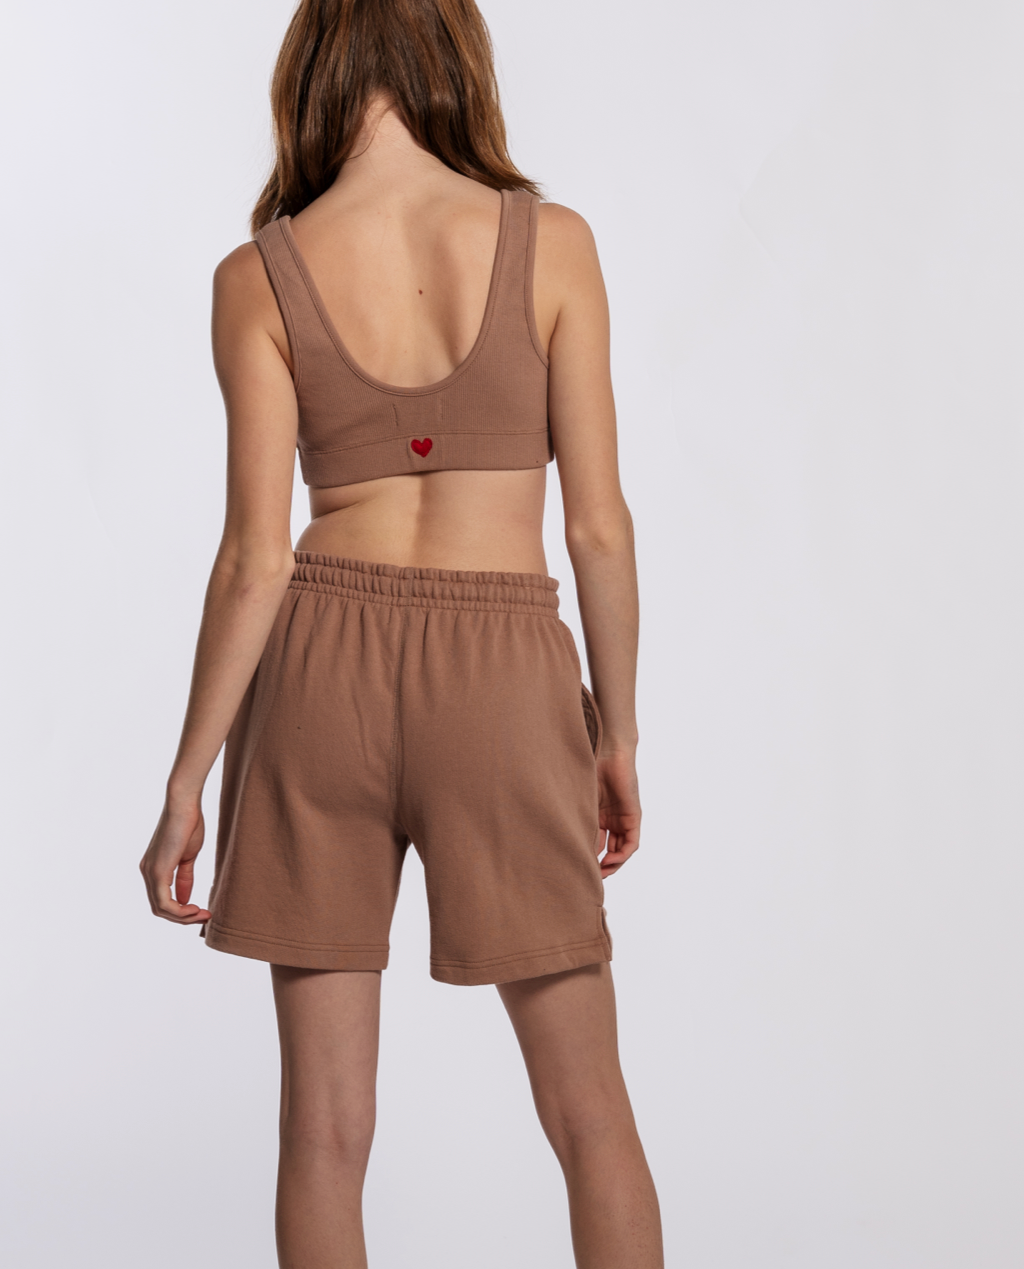 PISPARA™ Ion Shaping Shorts - Buy Today Get 55% Discount - MOLOOCO